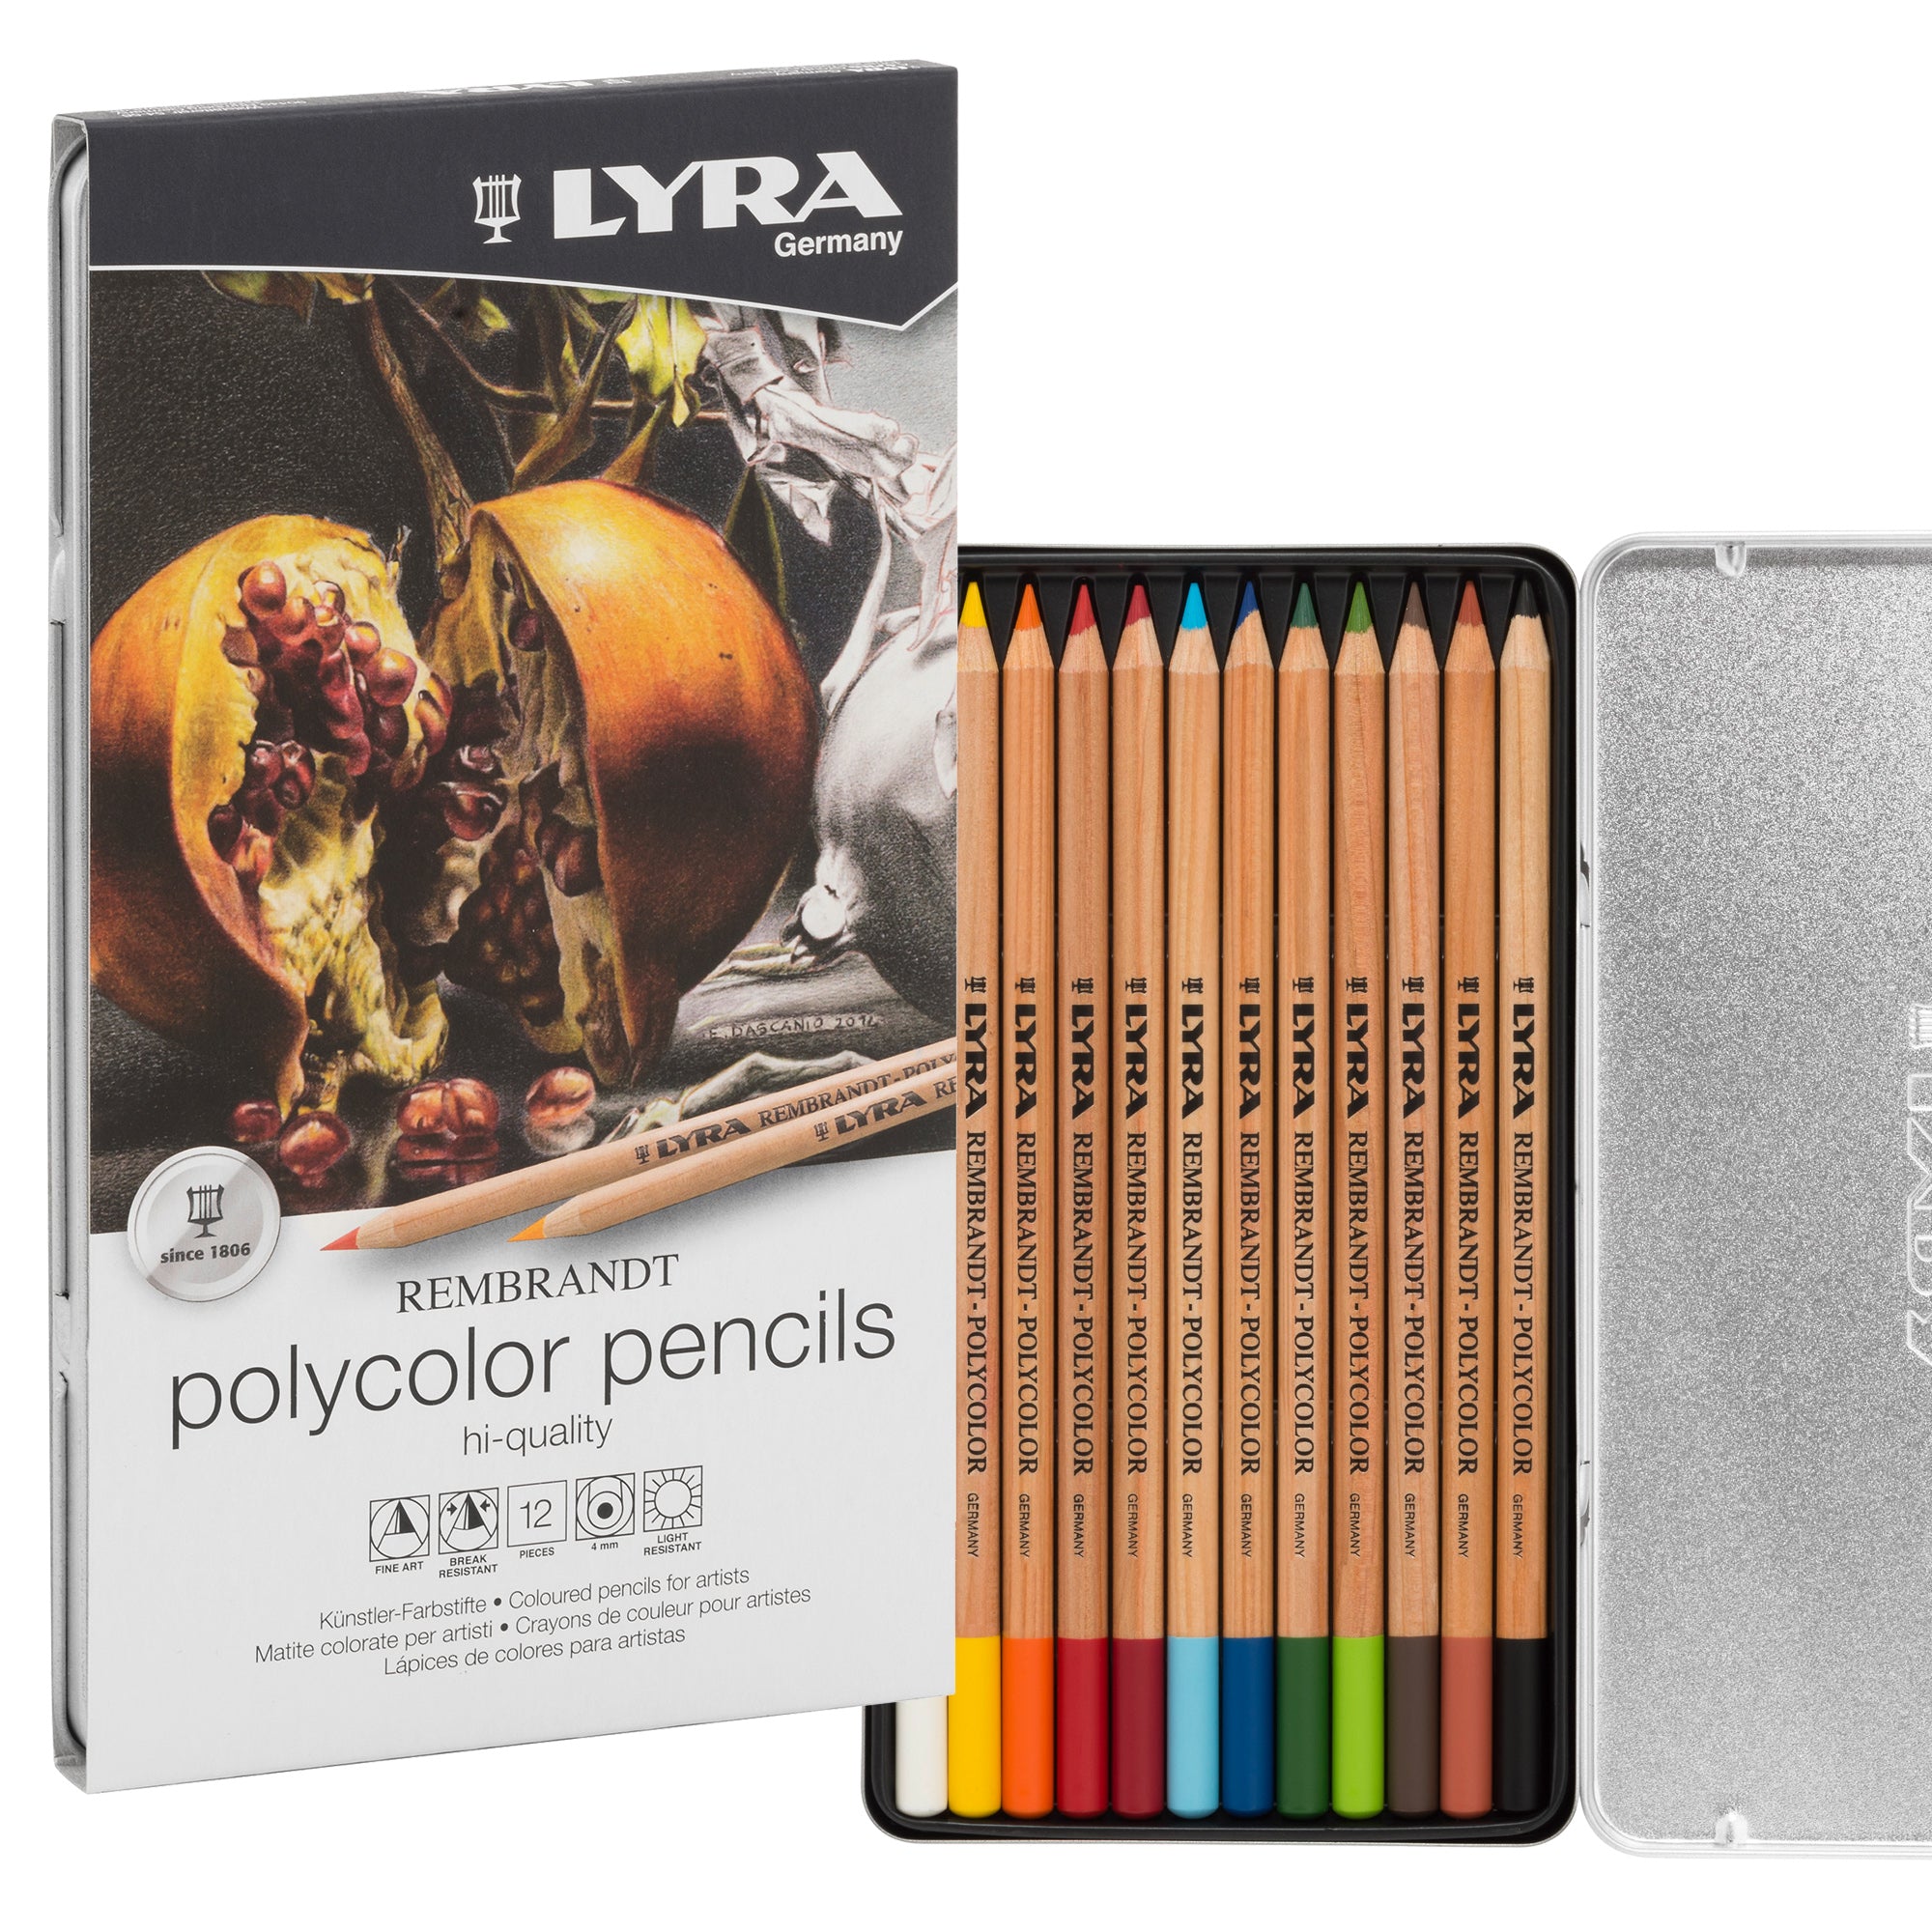 lyra-astuccio-metallo-12-pastelli-colorati-rembrandt-polycolor